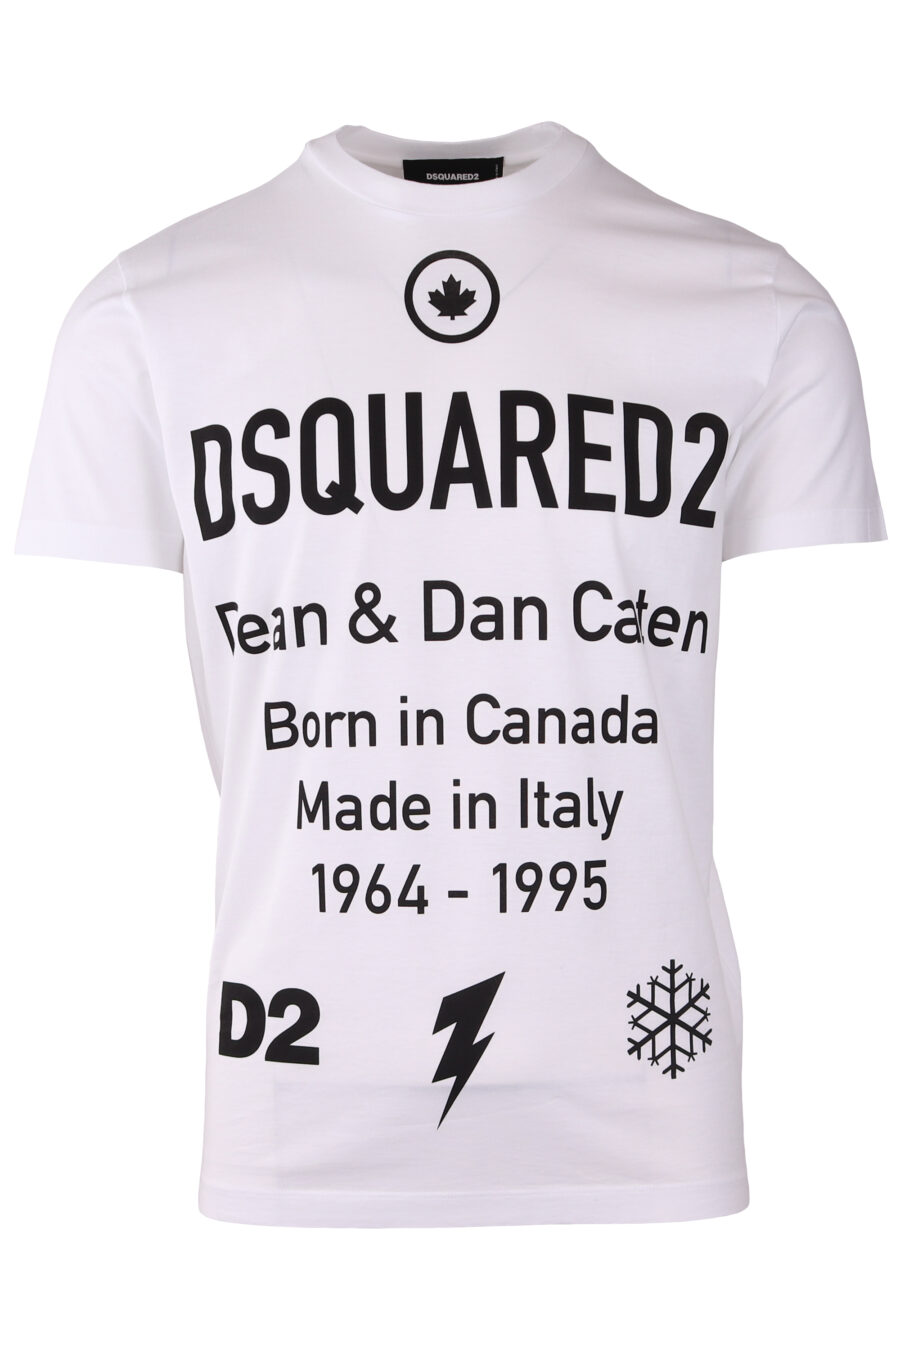 T-shirt blanc avec texte maxilogo "dean and dan caten" - IMG 8979